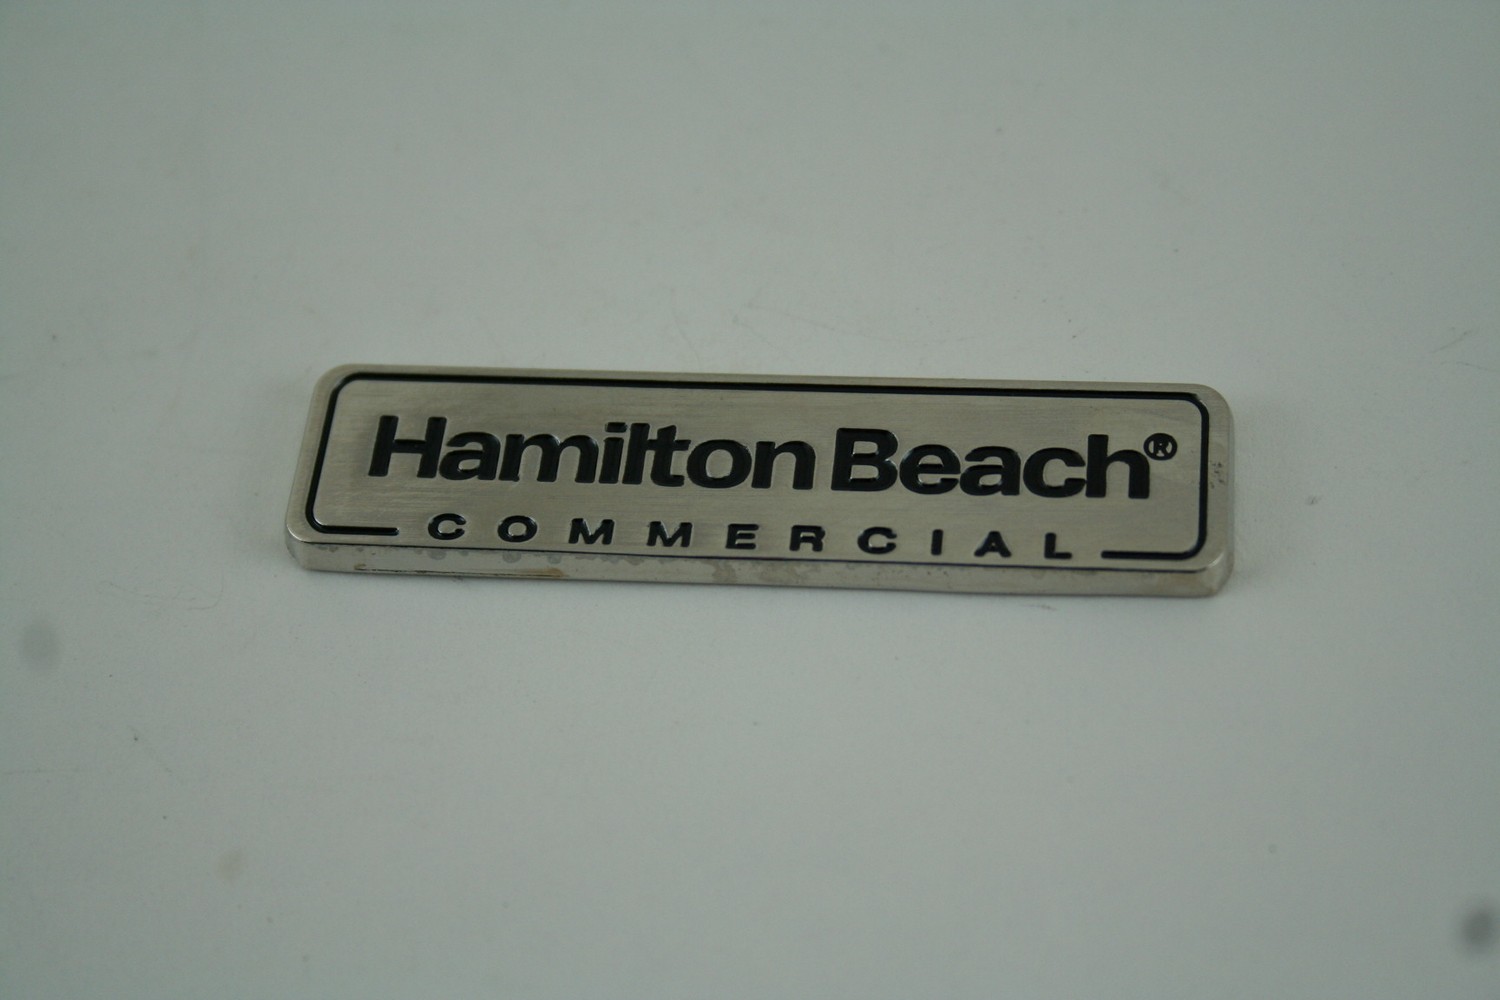 Hamilton Beach Comm. Badge